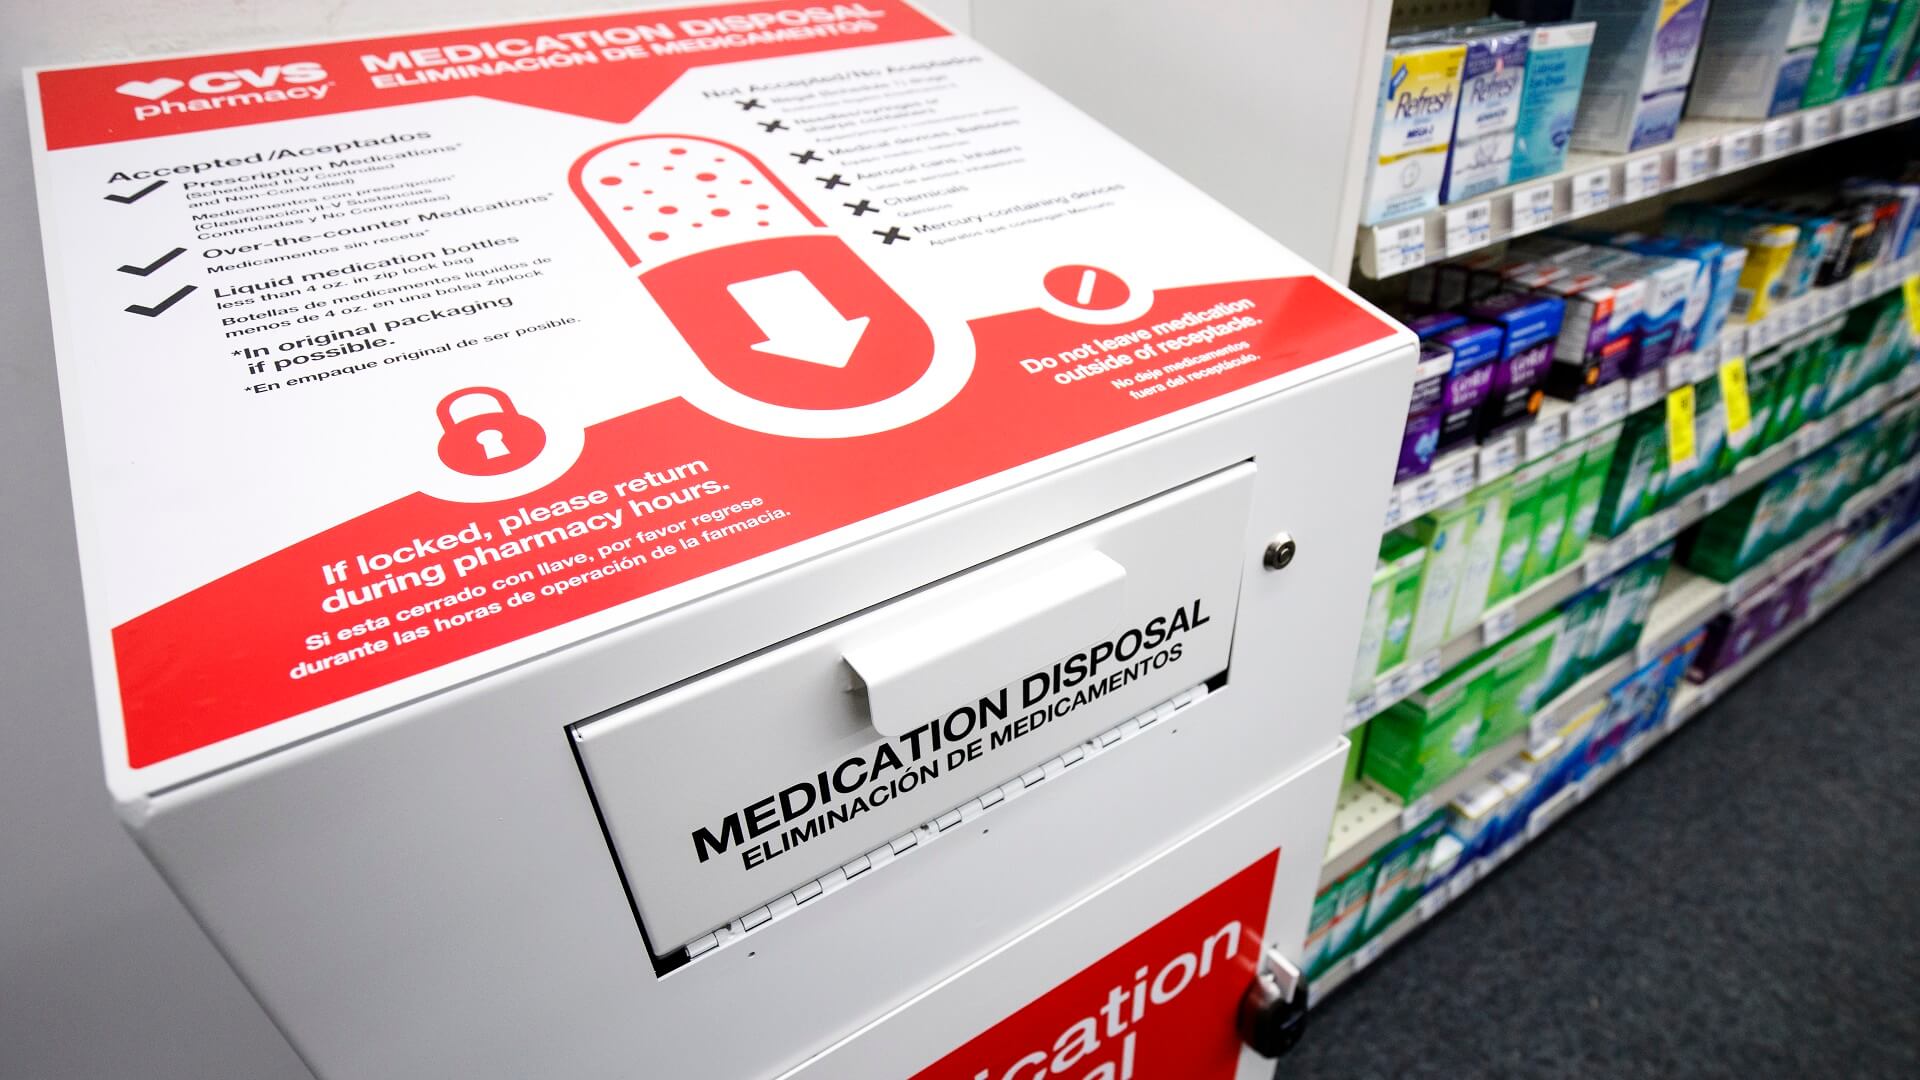 Check Your Shelf - Stop Medicine Abuse